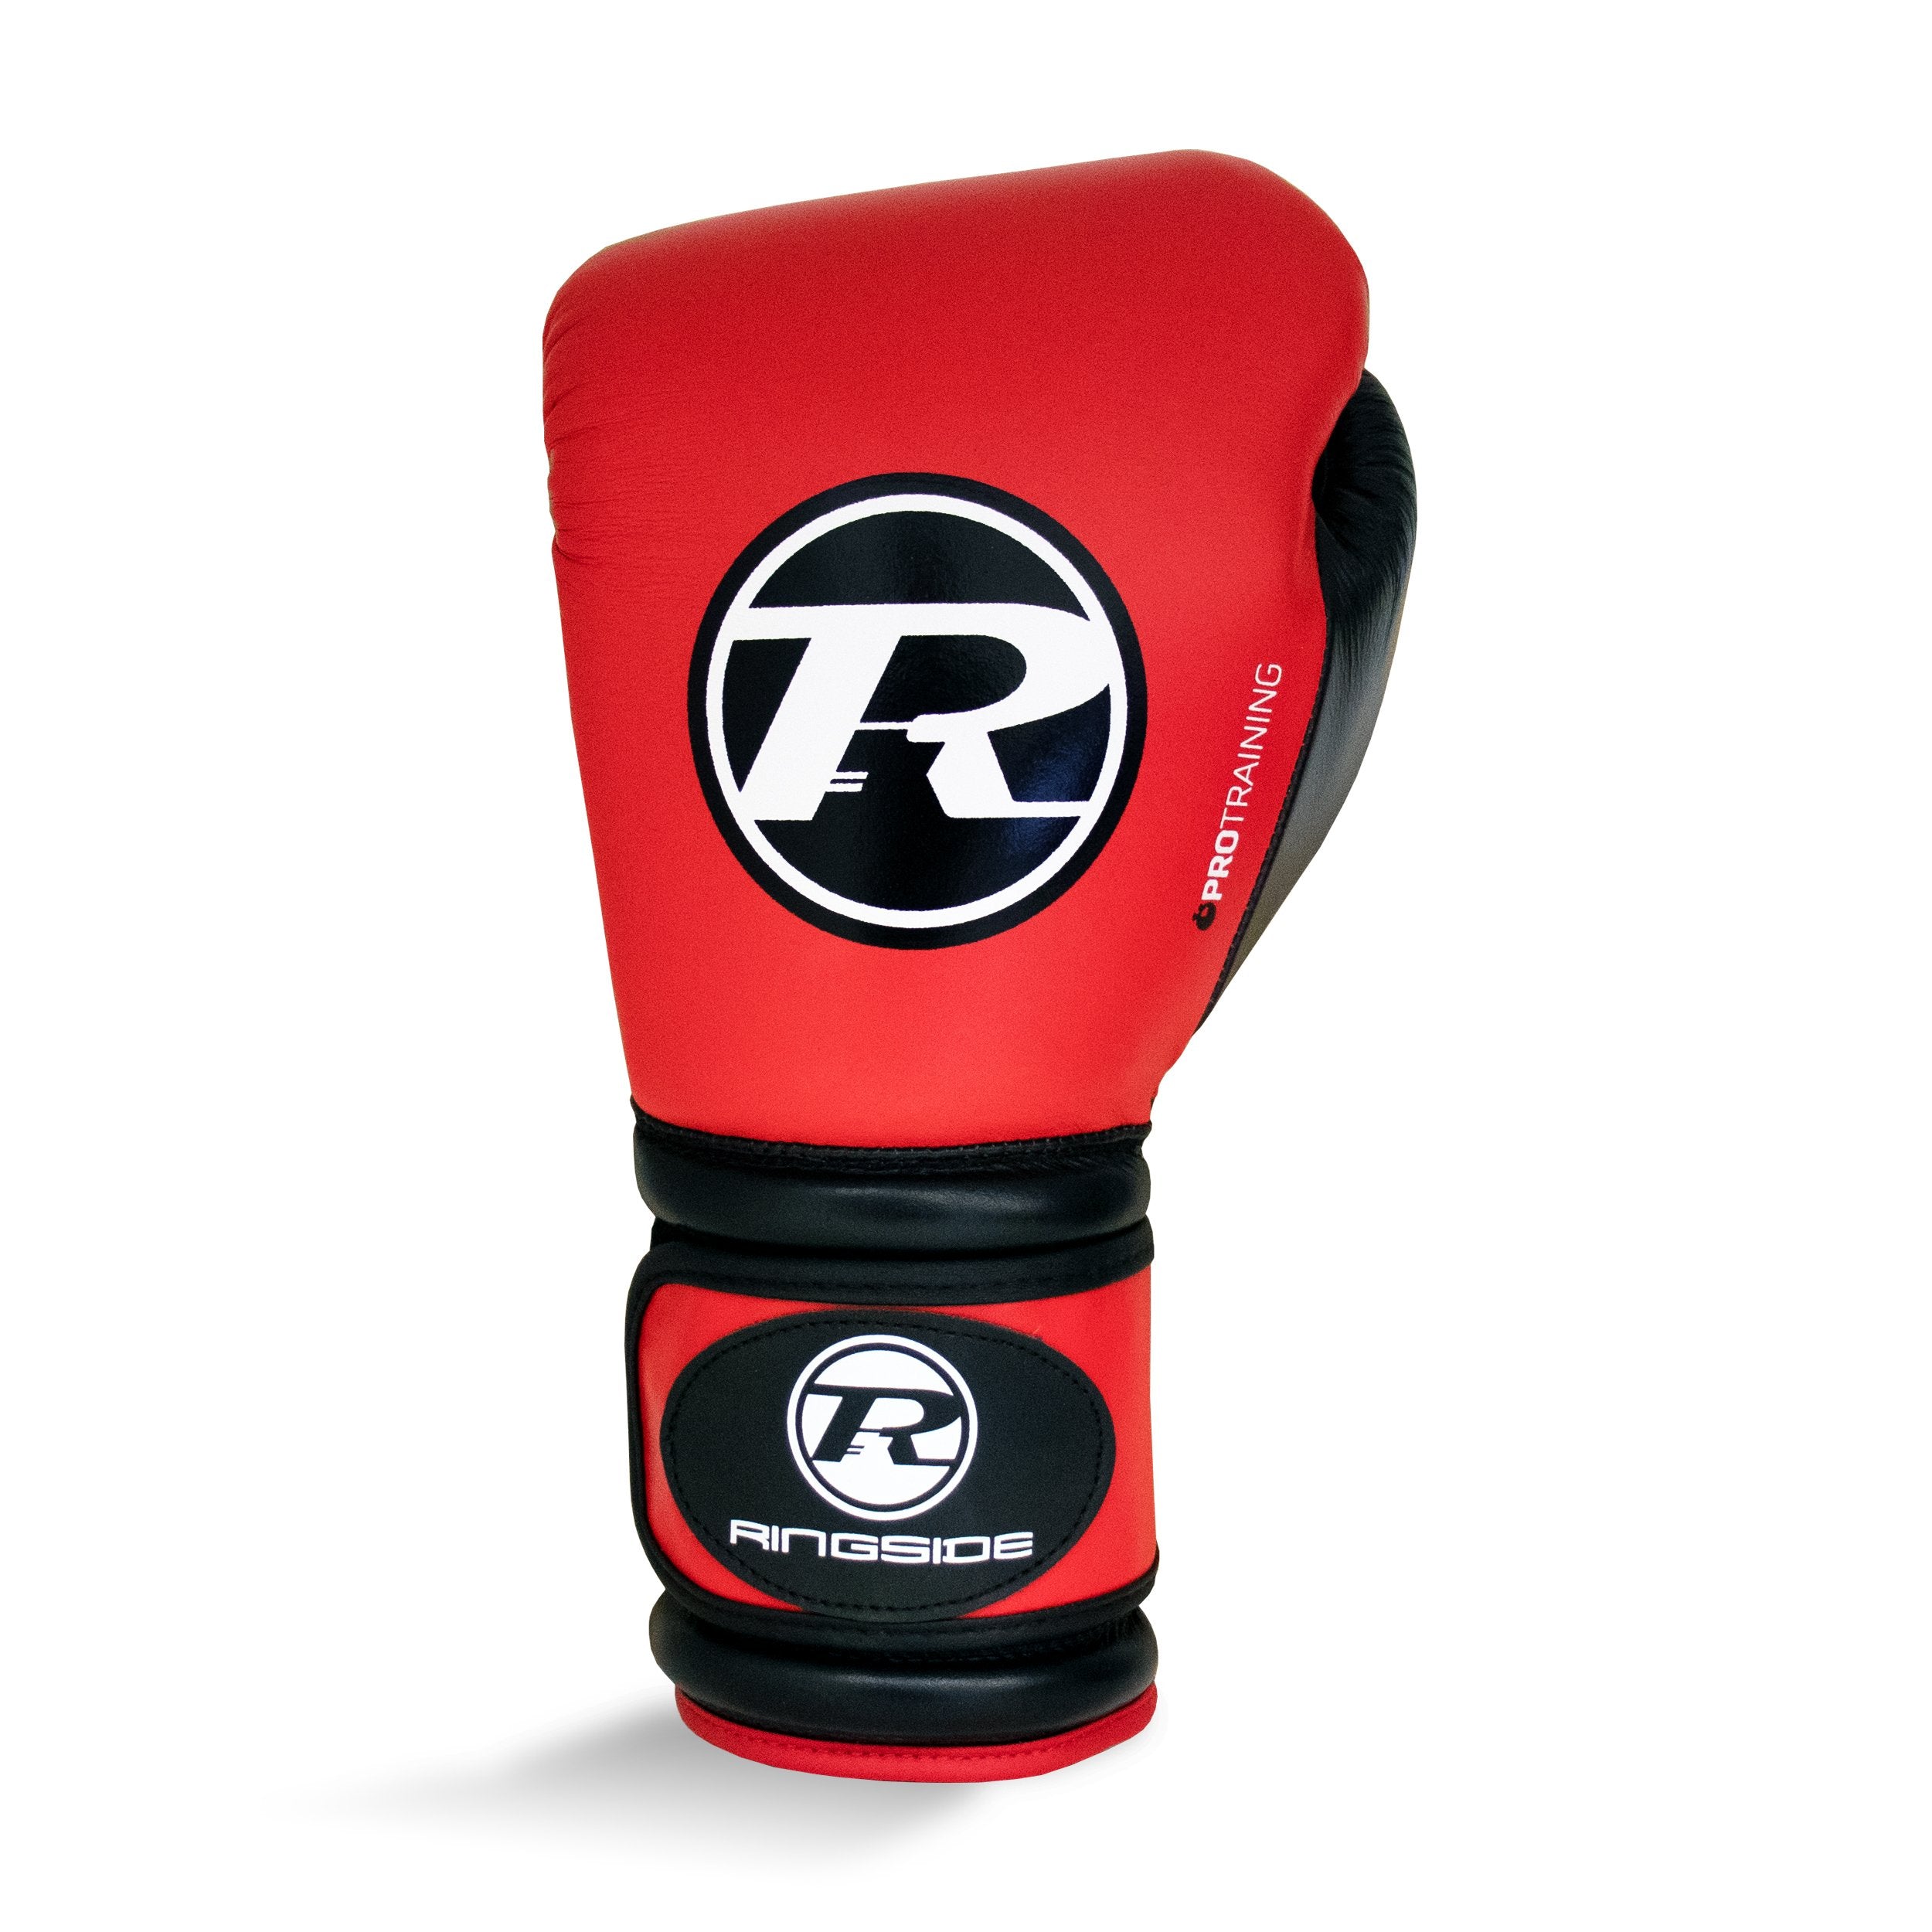 Pro Training G1 Boxing Glove Red Black